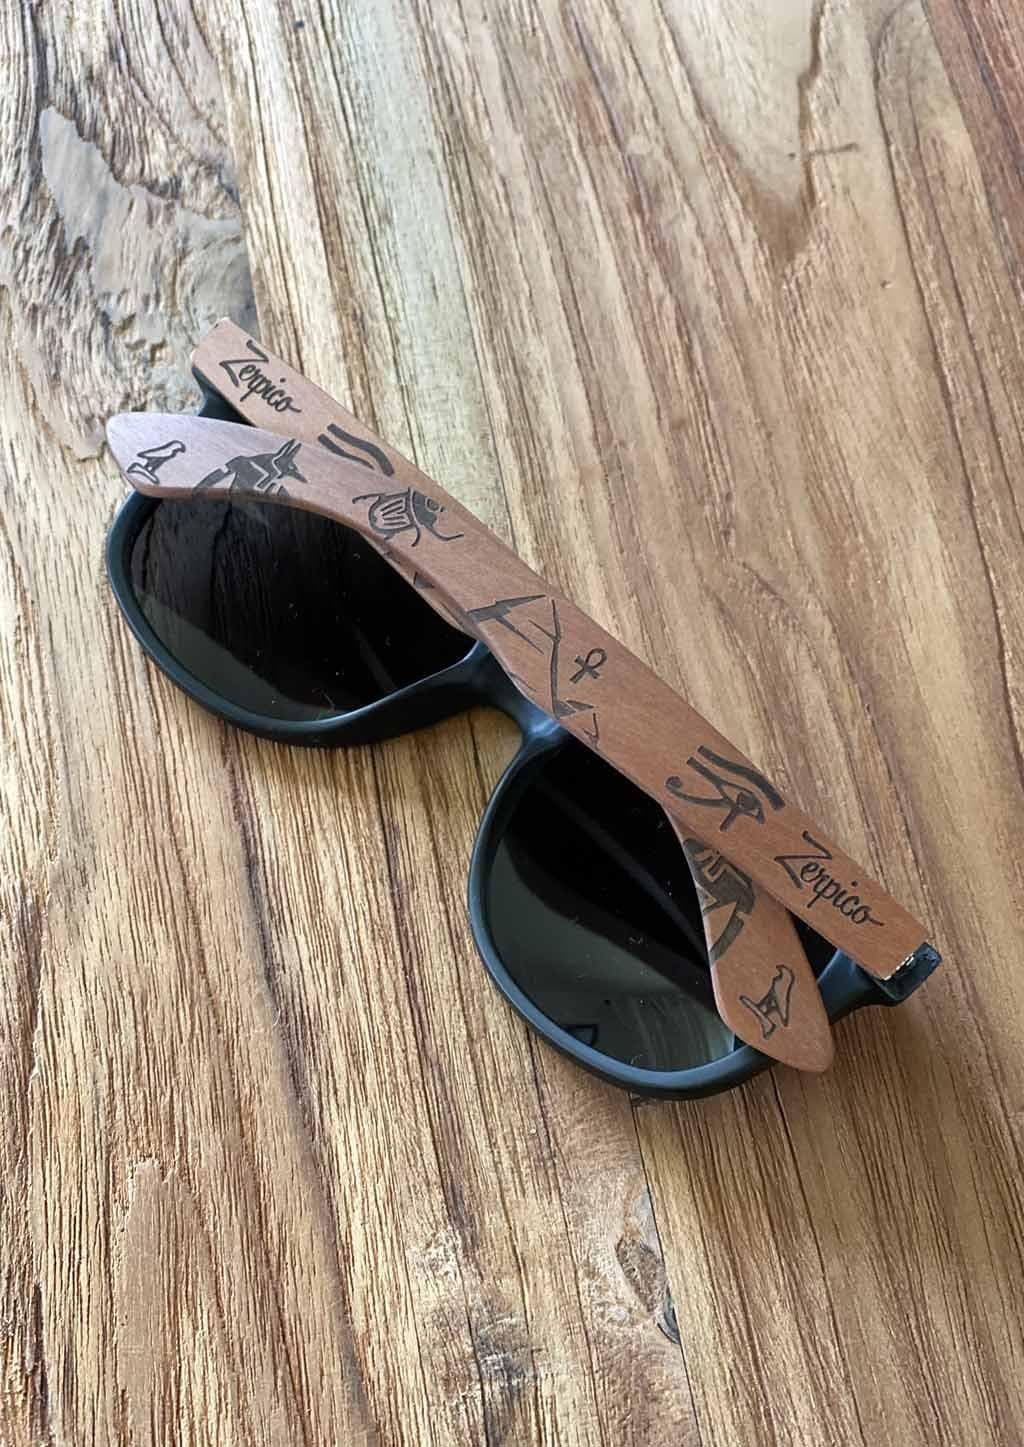 Eyewood Wayfarer  Spec. Ed. - Relic - Wooden Sunglasses